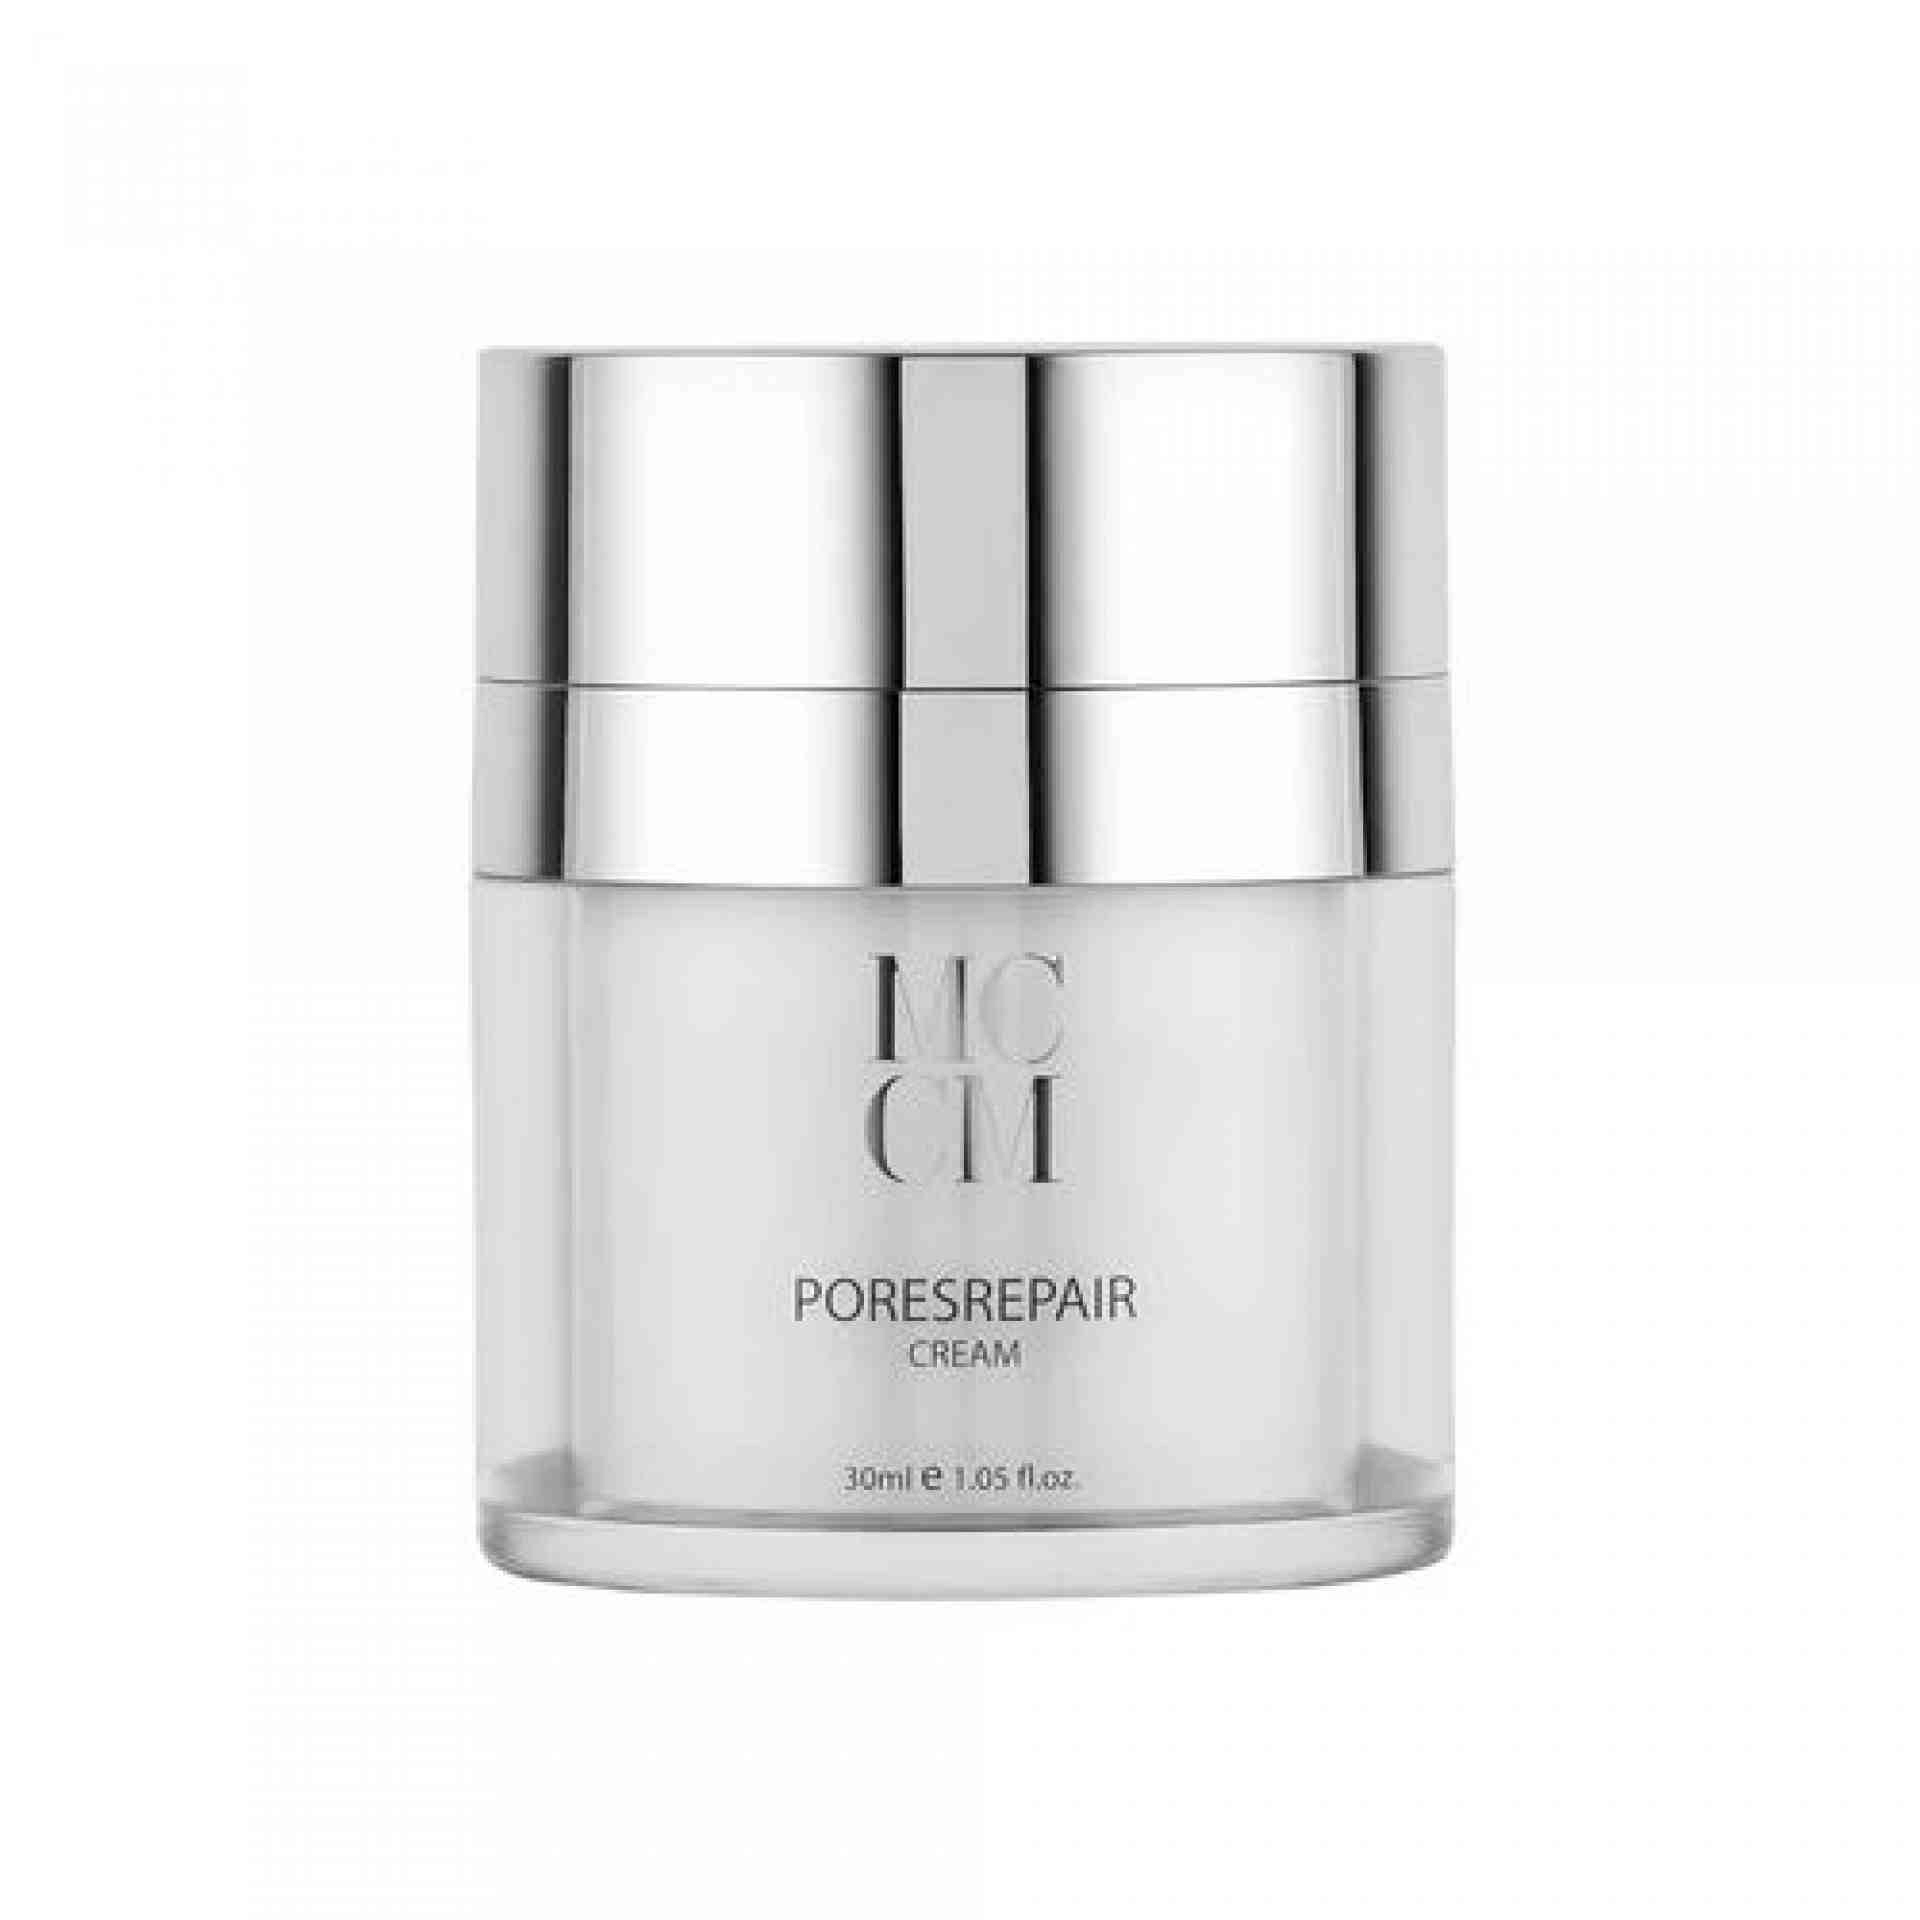 Poresrepair Cream | Crema Facial para poros abiertos o grandes 30 ml - Linea Facial - MCCM ®